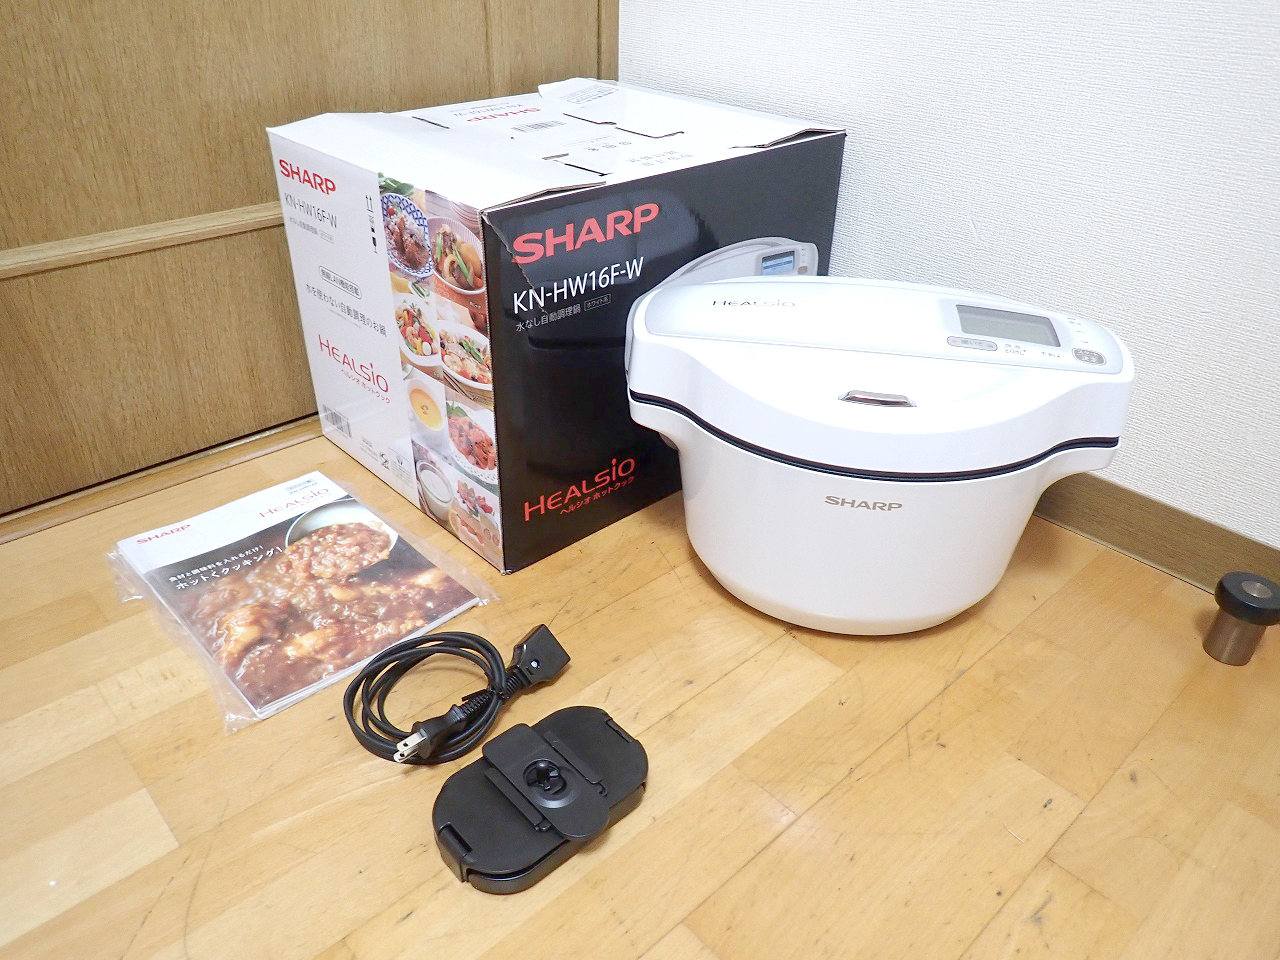 SHARP 水なし自動調理鍋 HEALSIO ホットクック KN-HW24FW… - 炊飯器